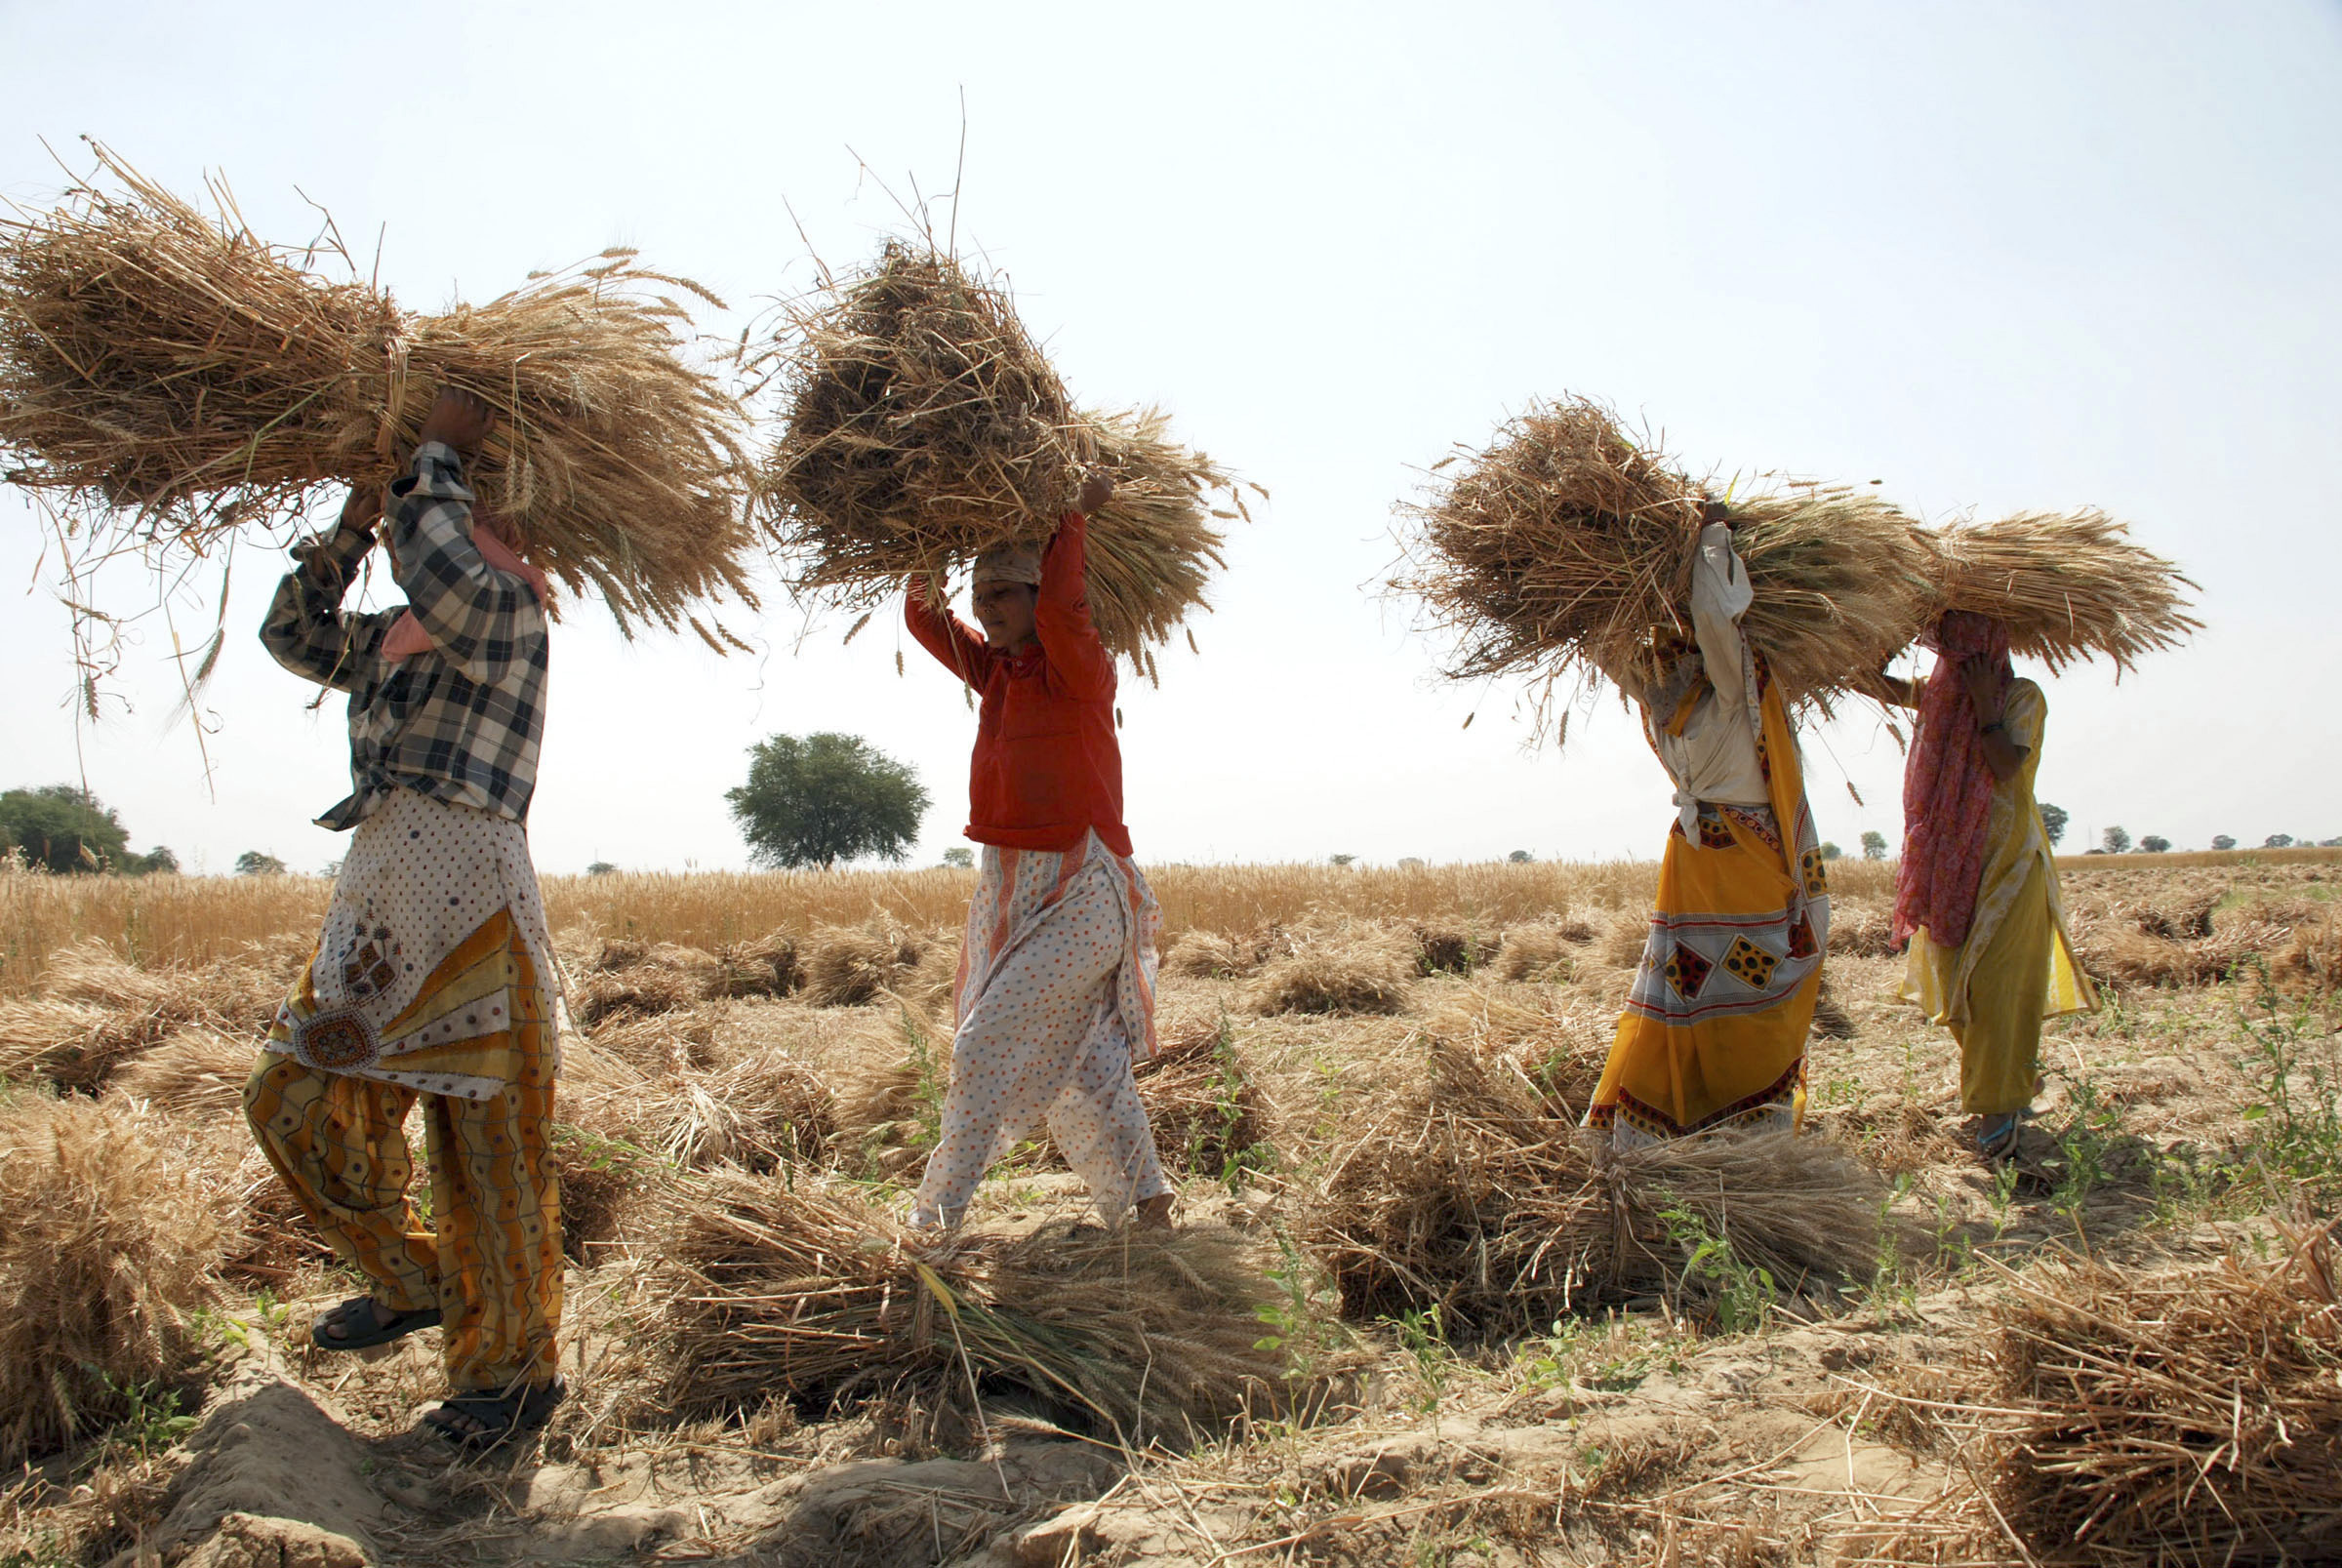 In northern india they harvest their wheat. Праздник пшеницы в Индии. Индия ожидает собрать в 2023 году рекордный урожай пшеницы. Planting Wheat in Brazil.. Manual harvesting of Wheat in India.